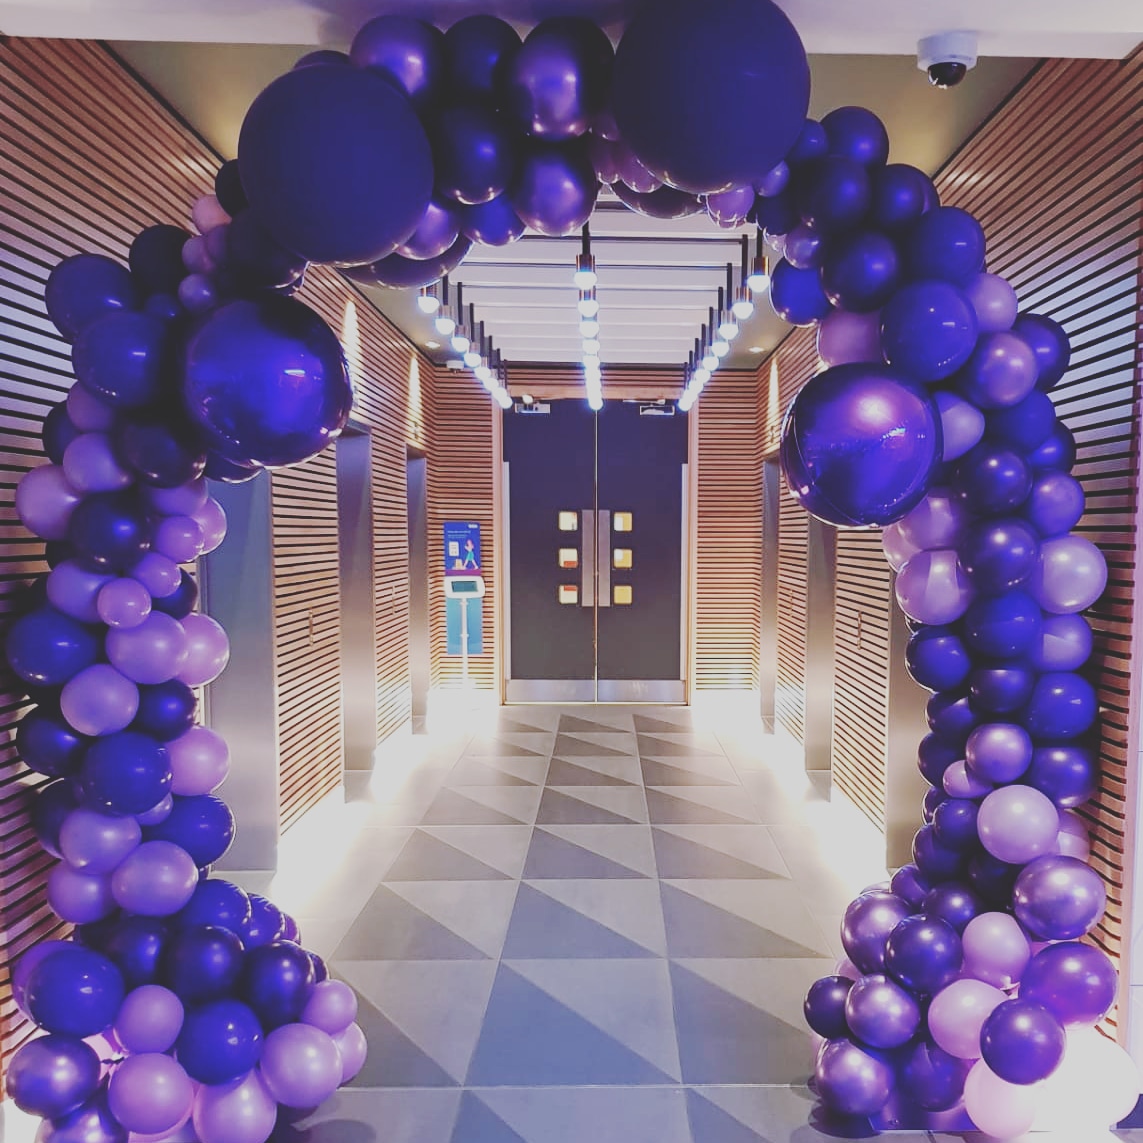 Purple Organic Balloon Arch created for International Women's Day celebrations